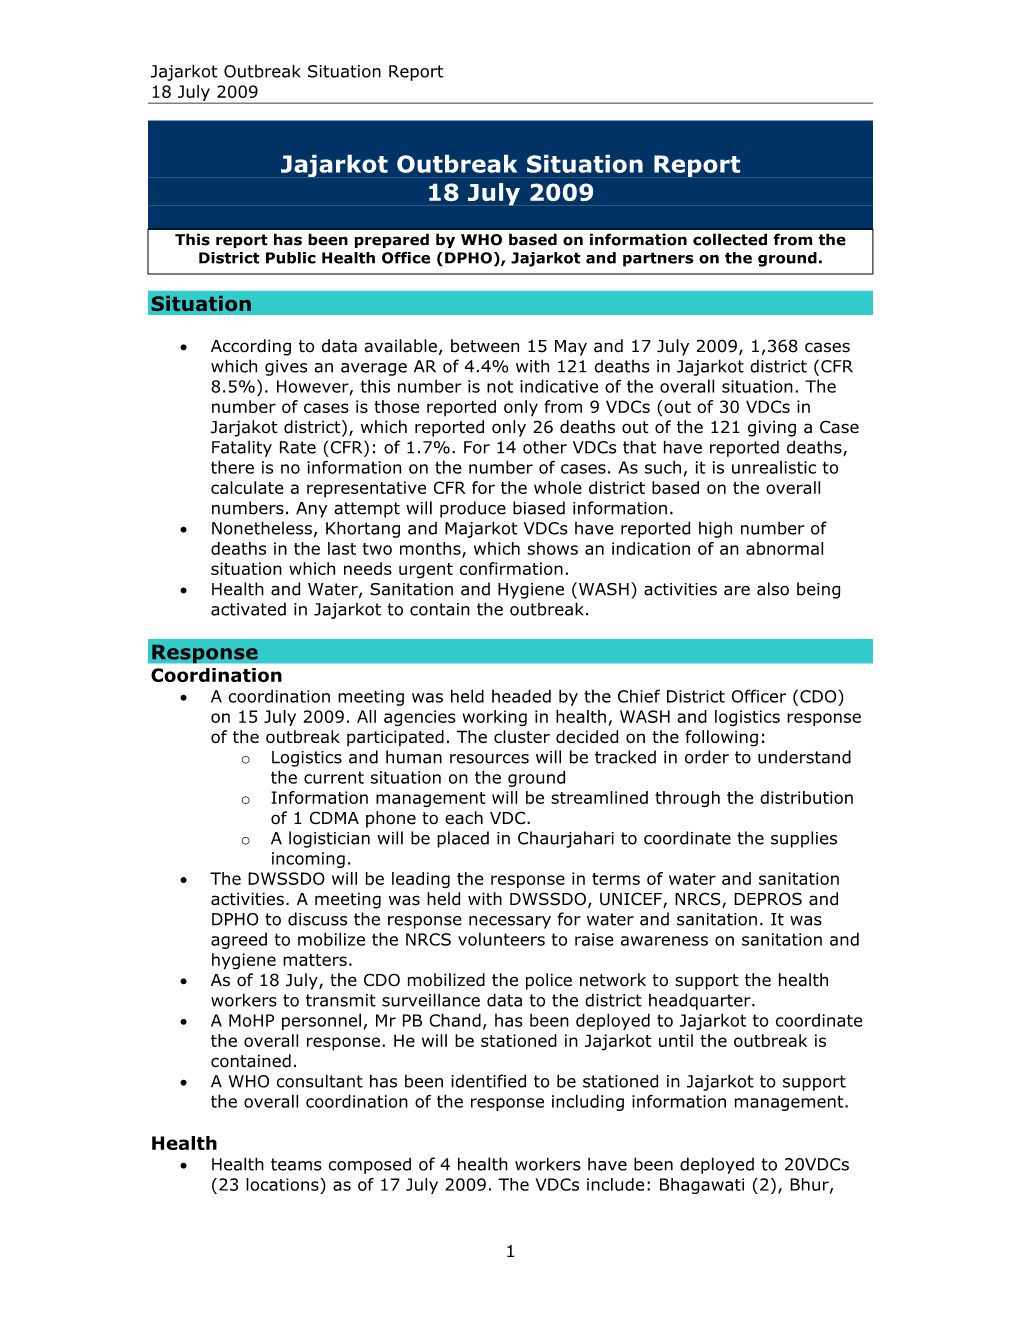 Jajarkot Outbreak Situation Report 18 July 2009